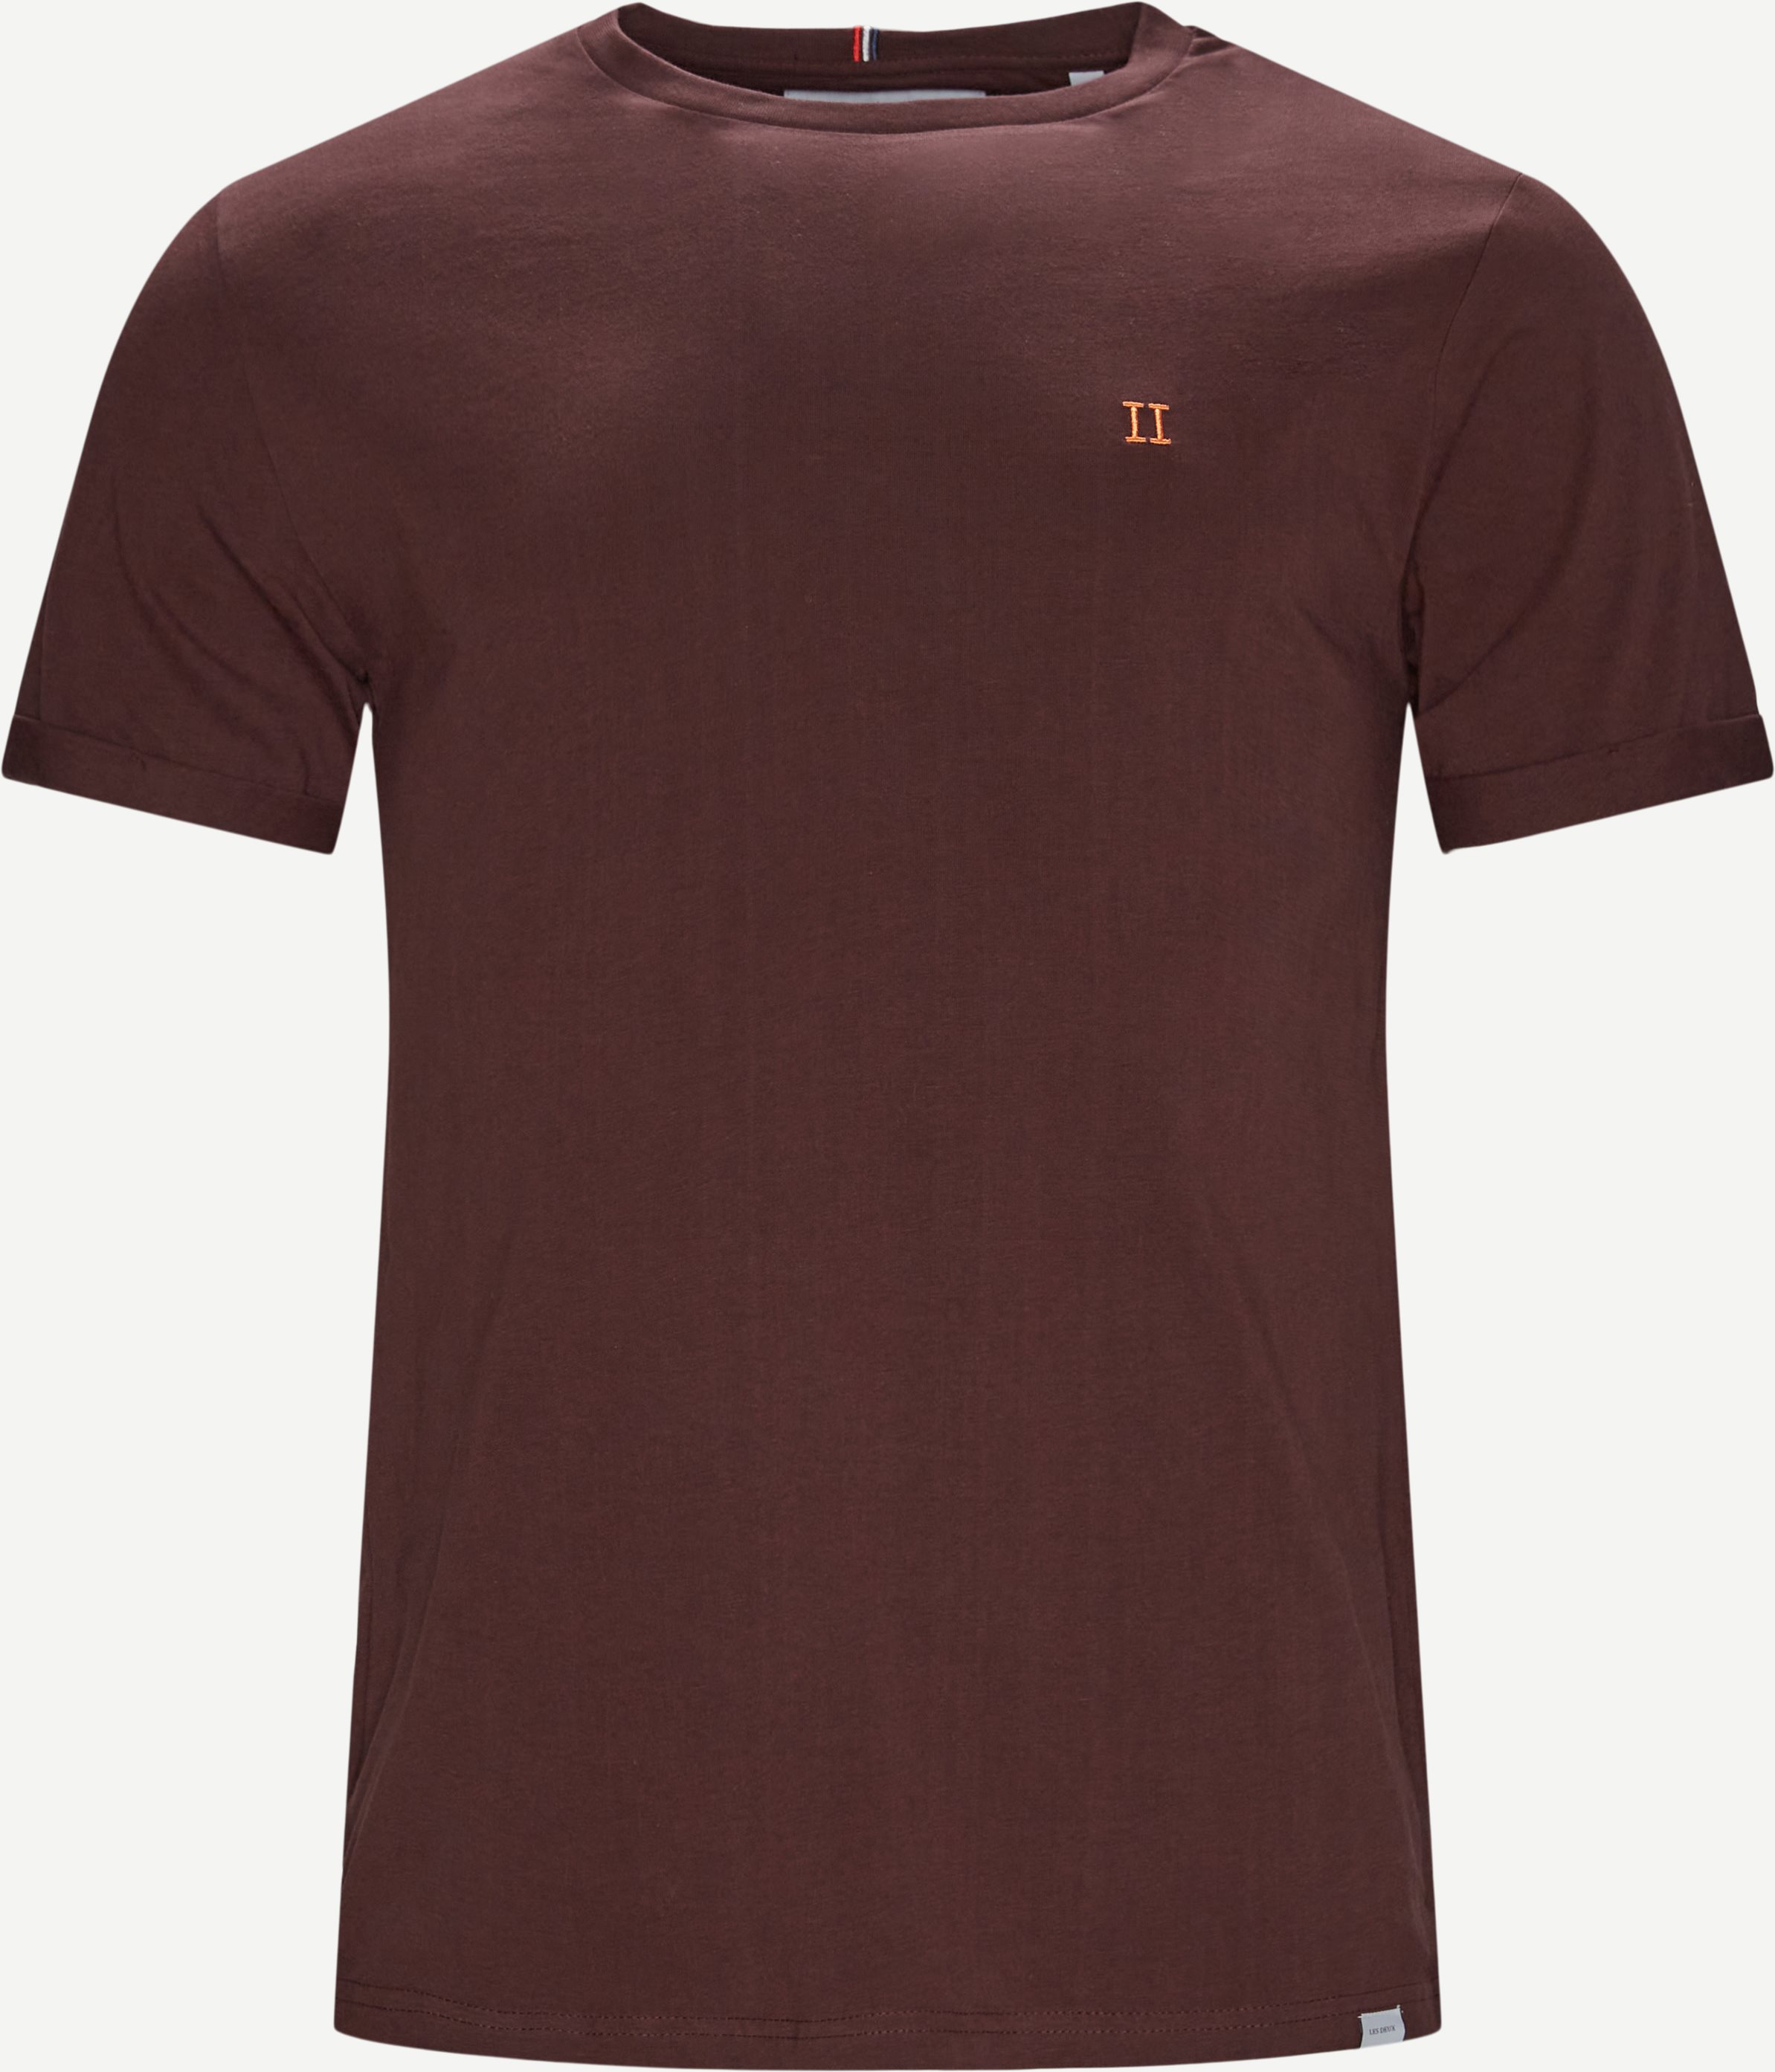 Nørregaard T-shirt - T-shirts - Regular fit - Bordeaux